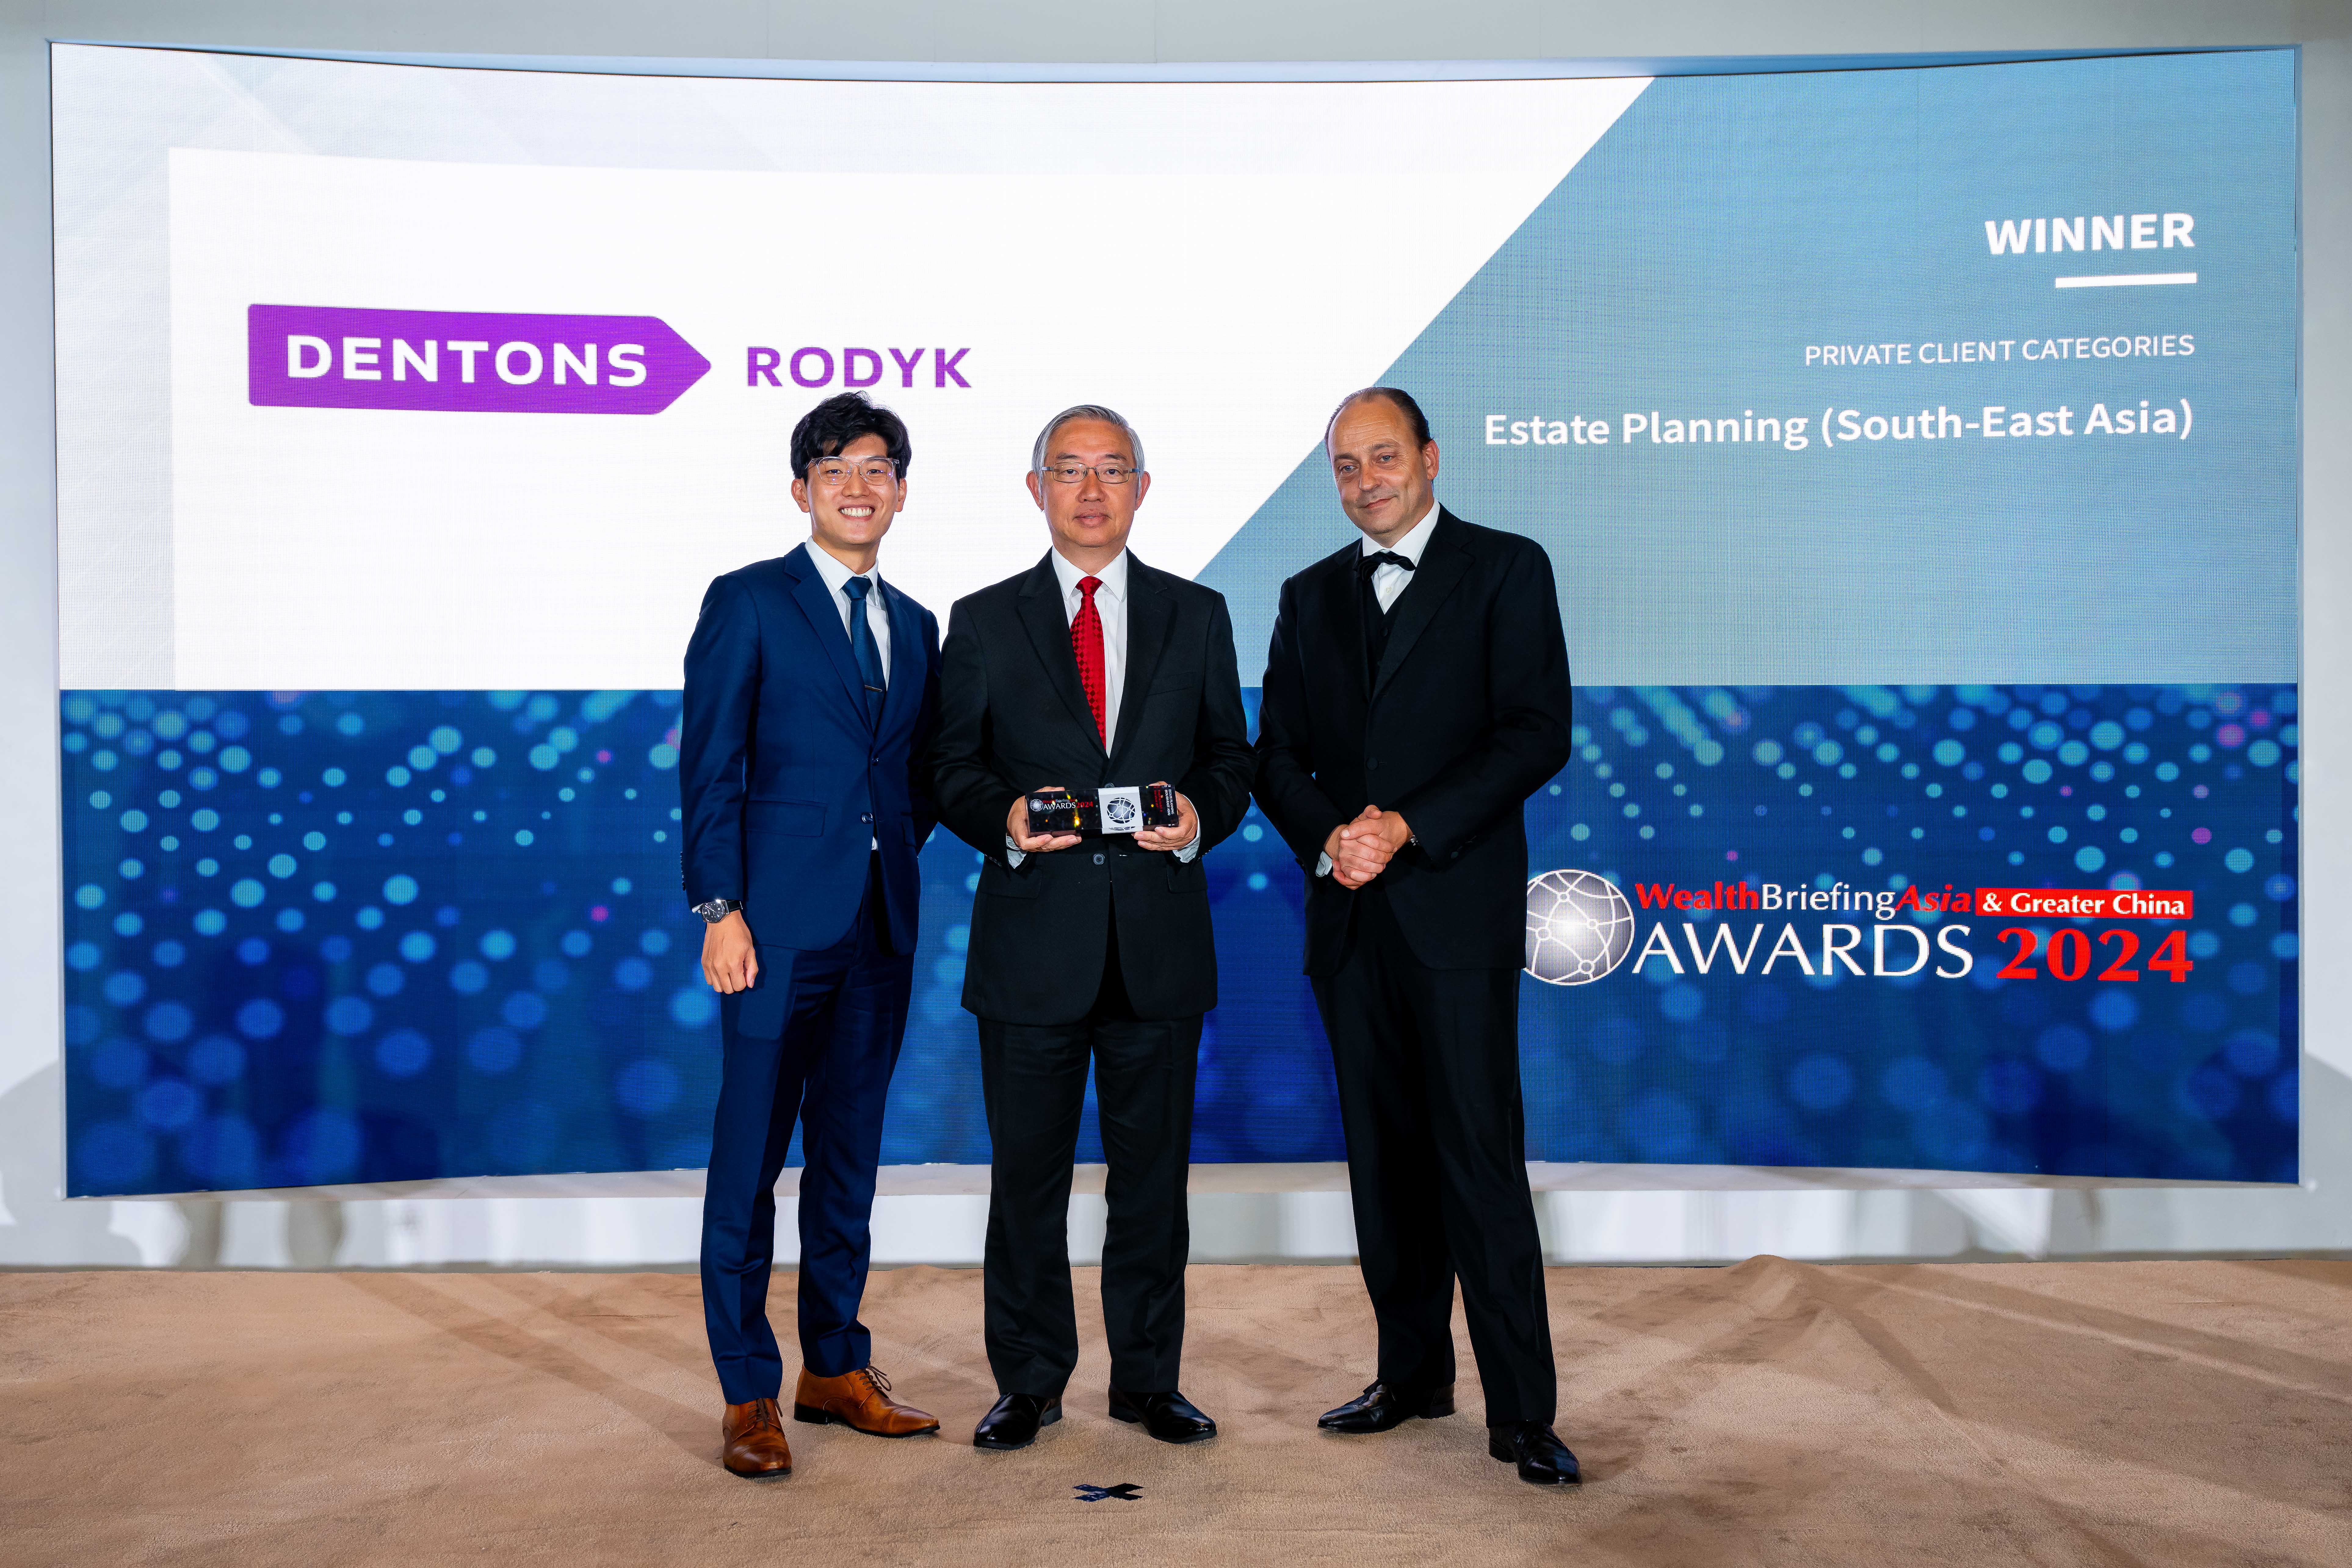 Senior Partner Edmund Leow, SC and Associate Cho Joo Sam receive the Estate Planning (South-East Asia) award on behalf of the firm